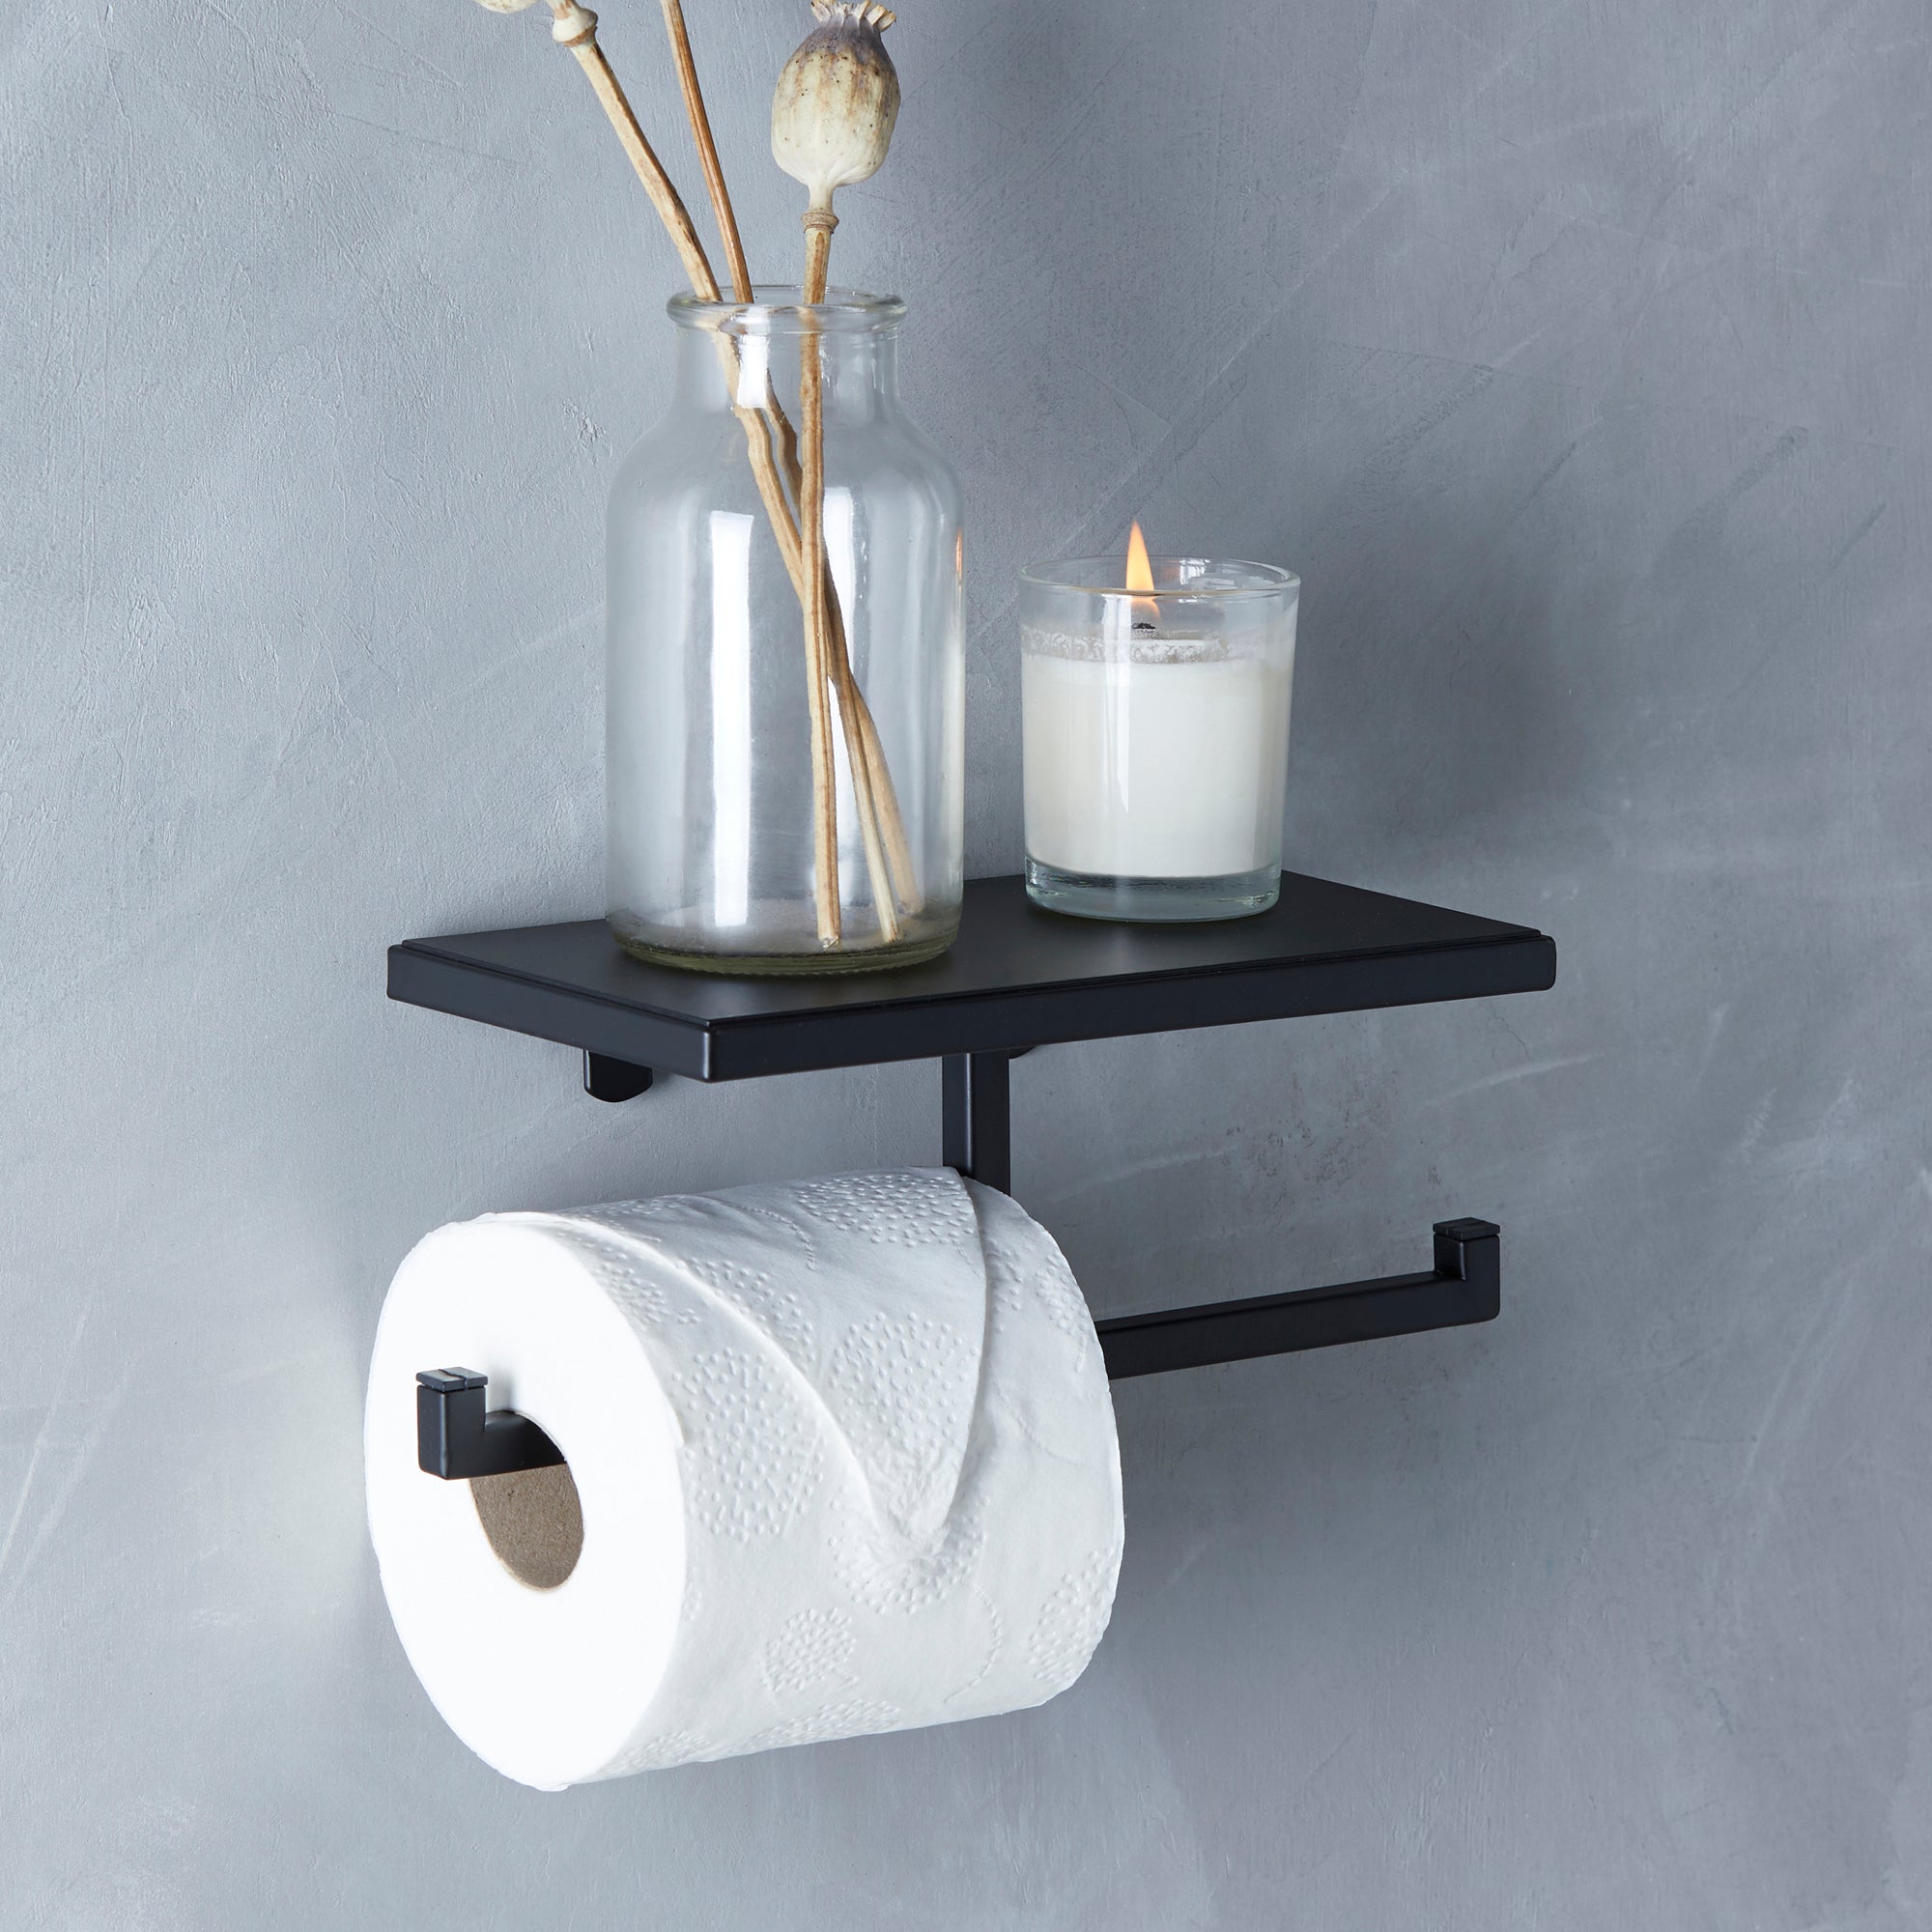 Free Standing Toilet Paper Holder Smooth Wooden Bathroom Kitchen